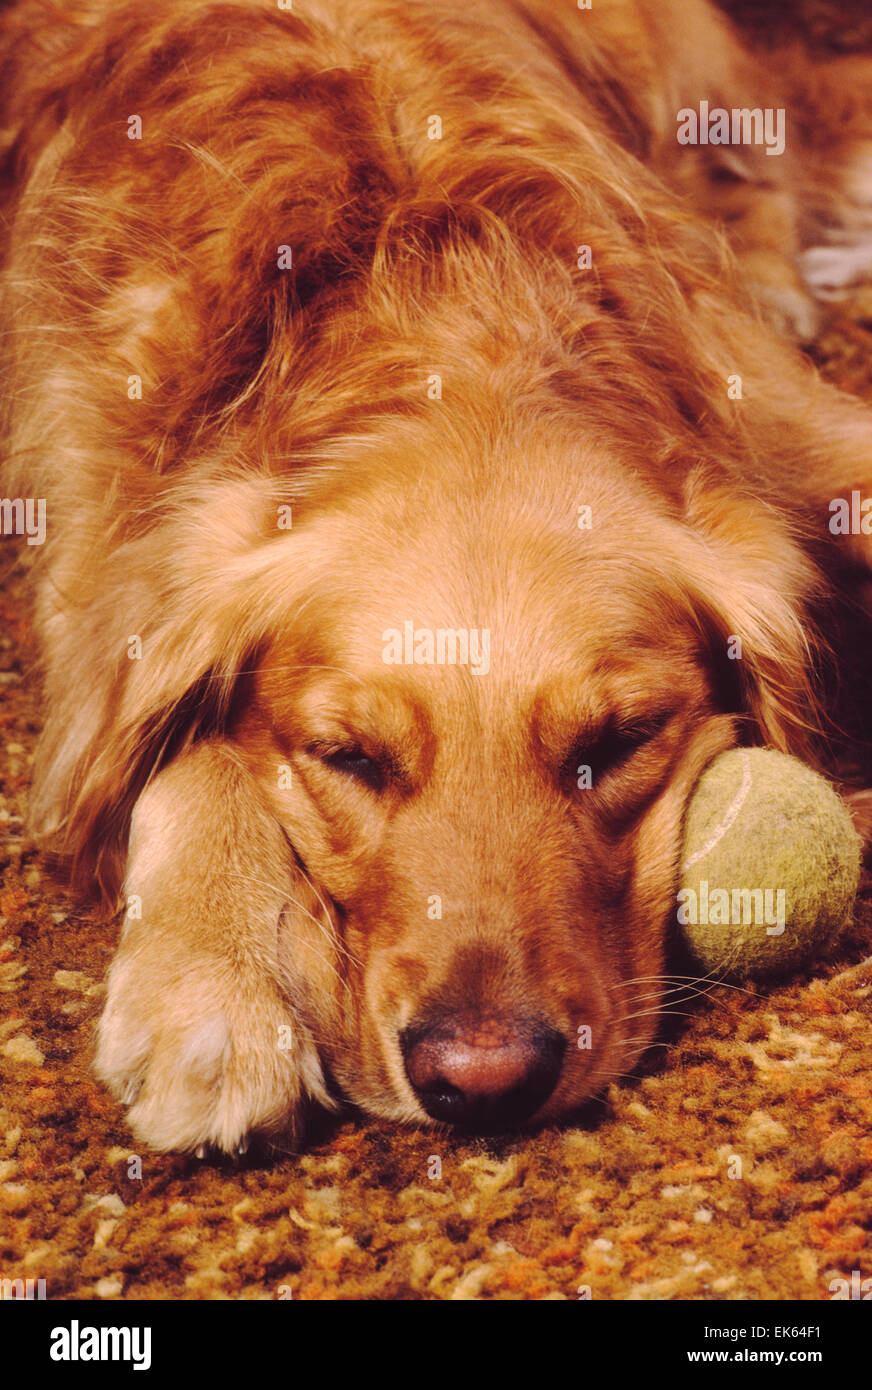 Sleeping Golden Retriever dog with tennis ball Stock Photo